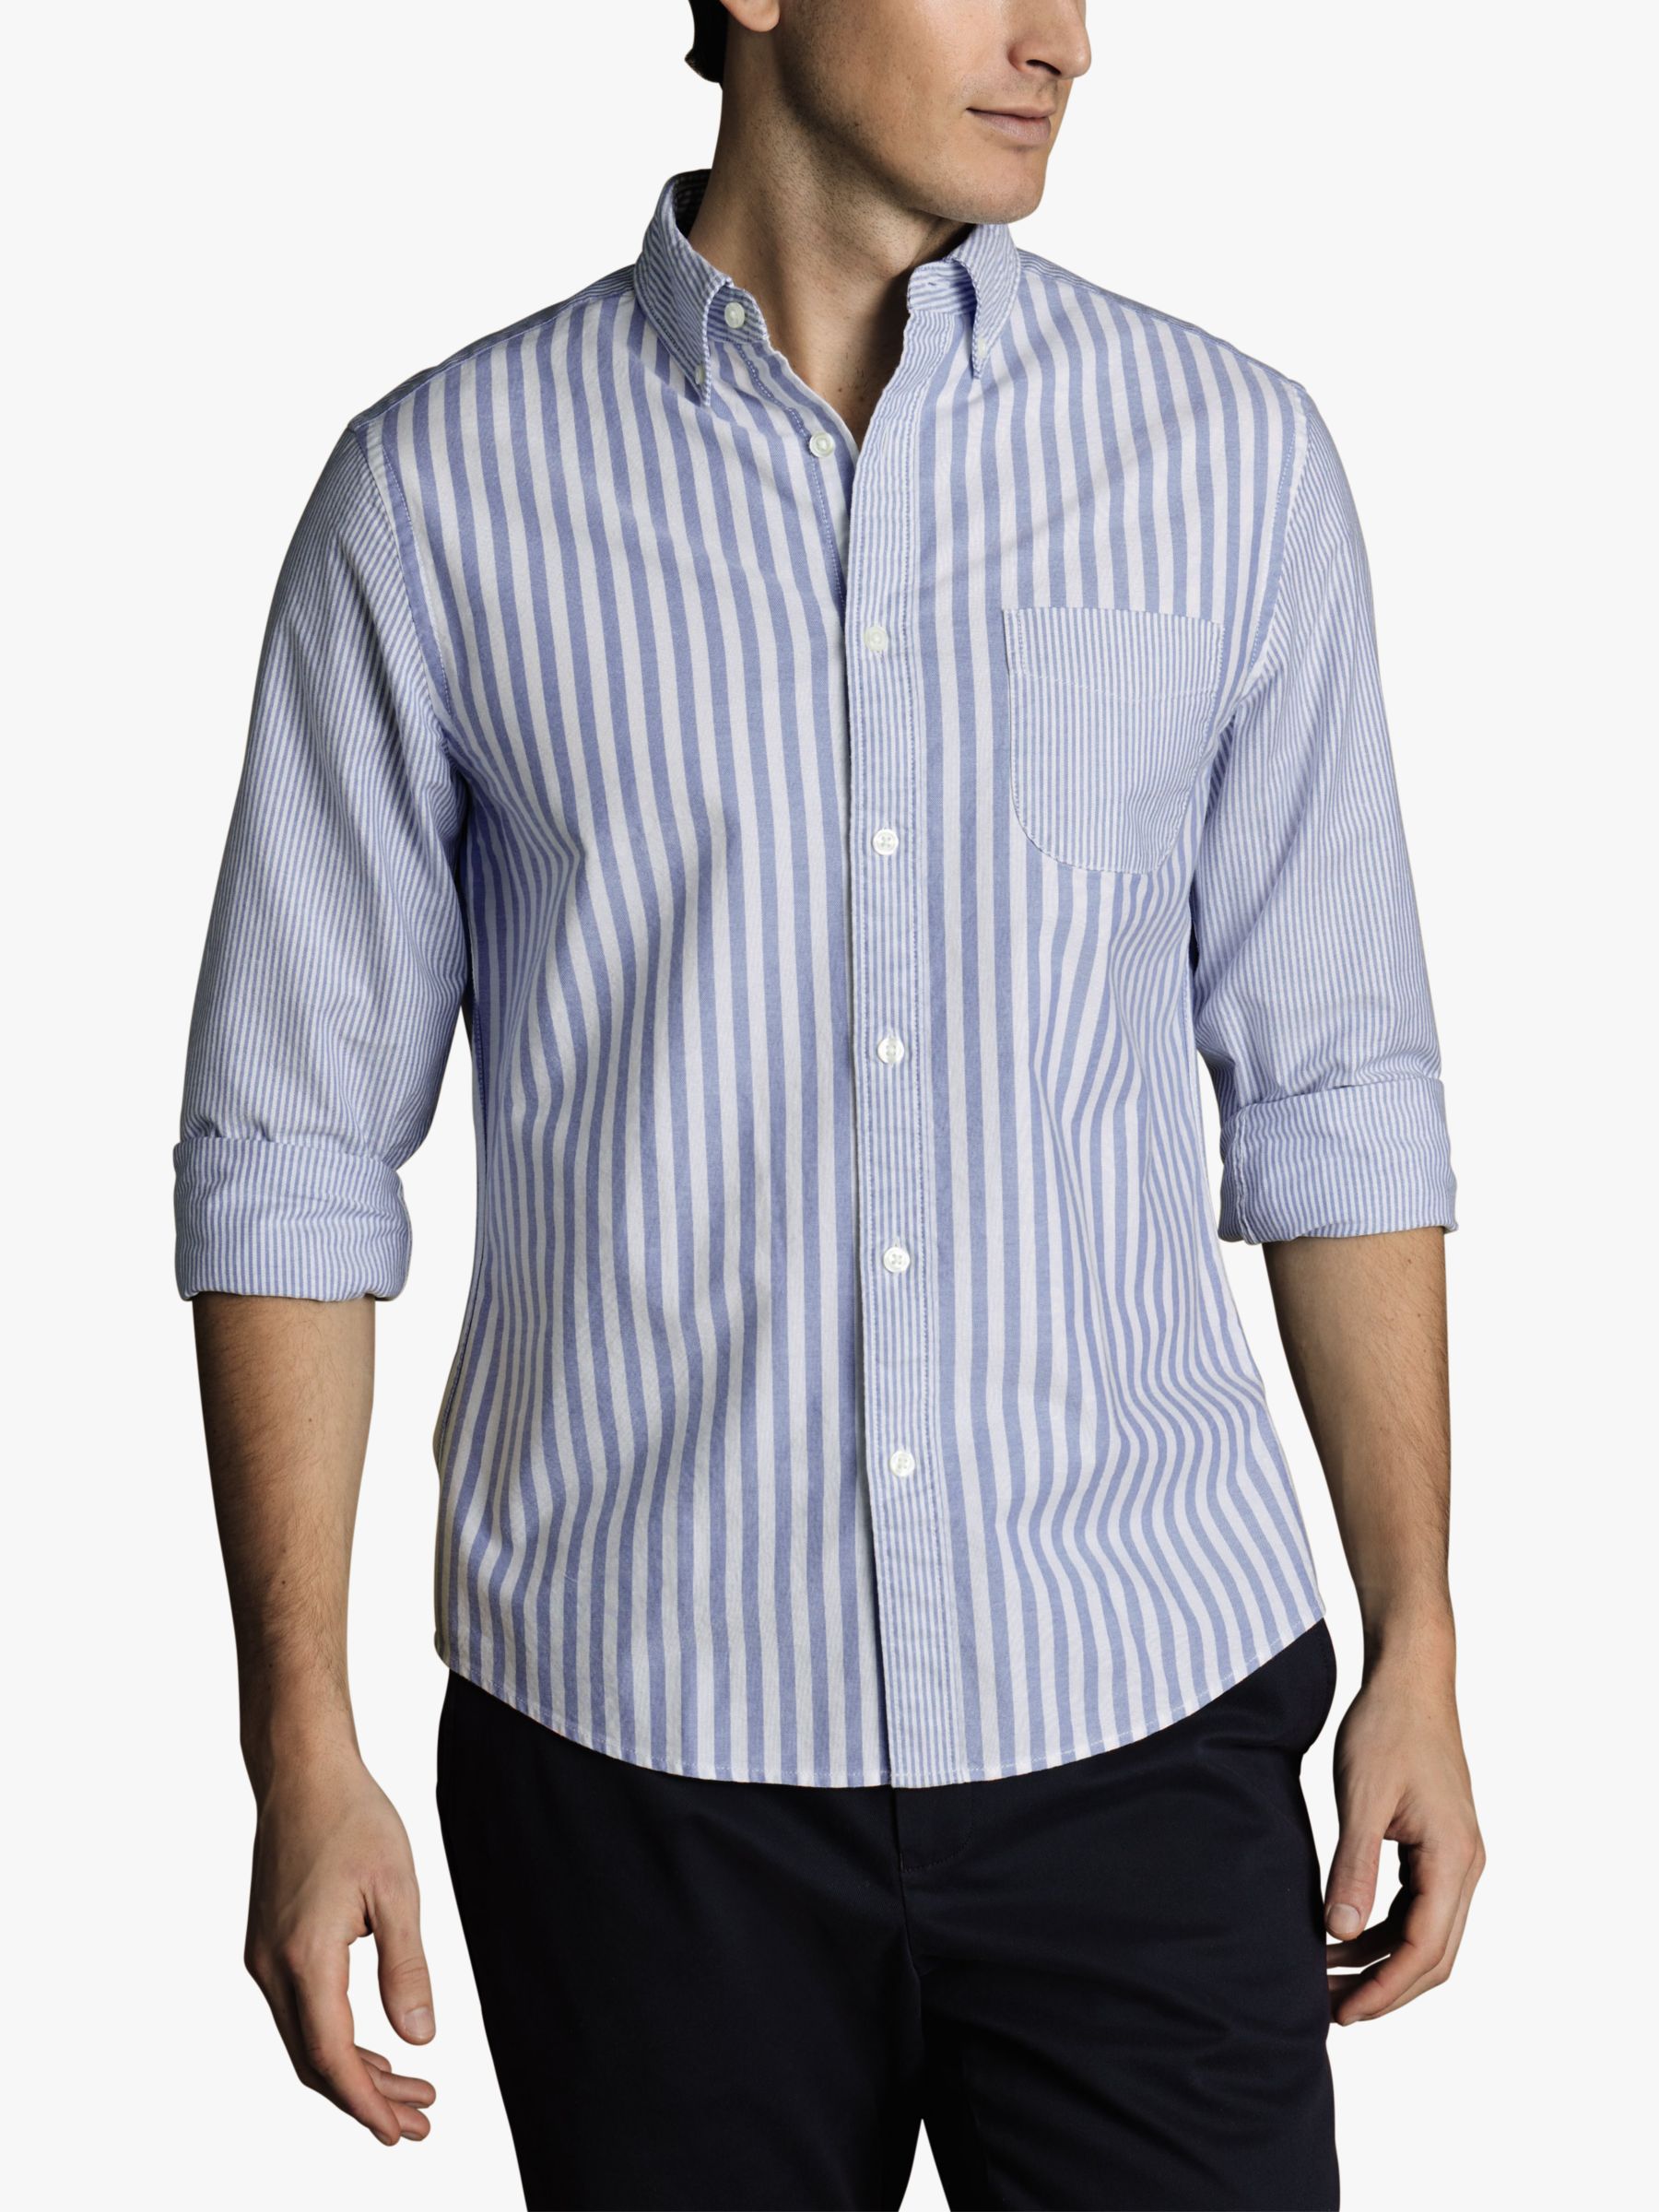 Charles Tyrwhitt Slim Fit Strip Patchwork Stretch Oxford Shirt, Ocean Blue, XL